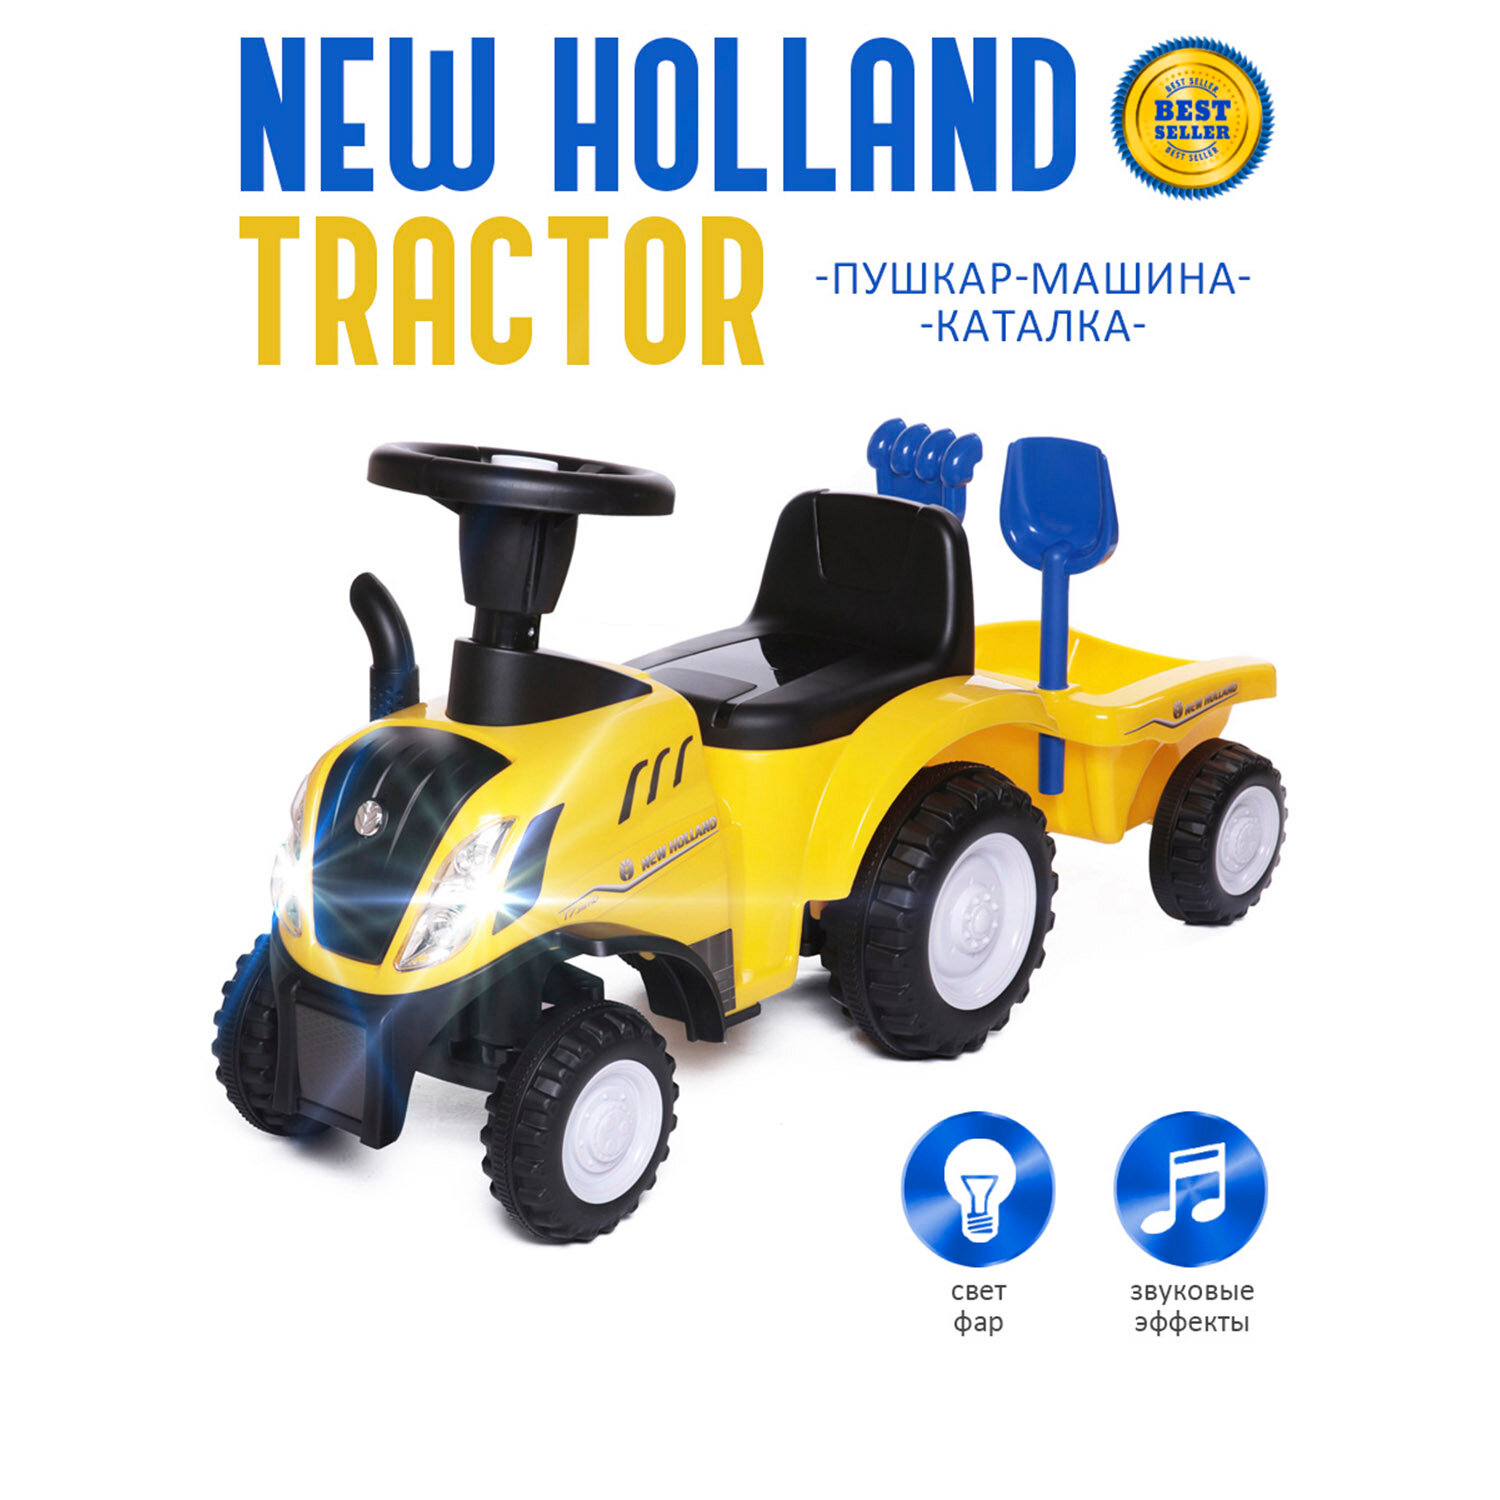 Пушкар машина-каталка детская New Holland Tractor Babycare, звуковые эффекты, желтый